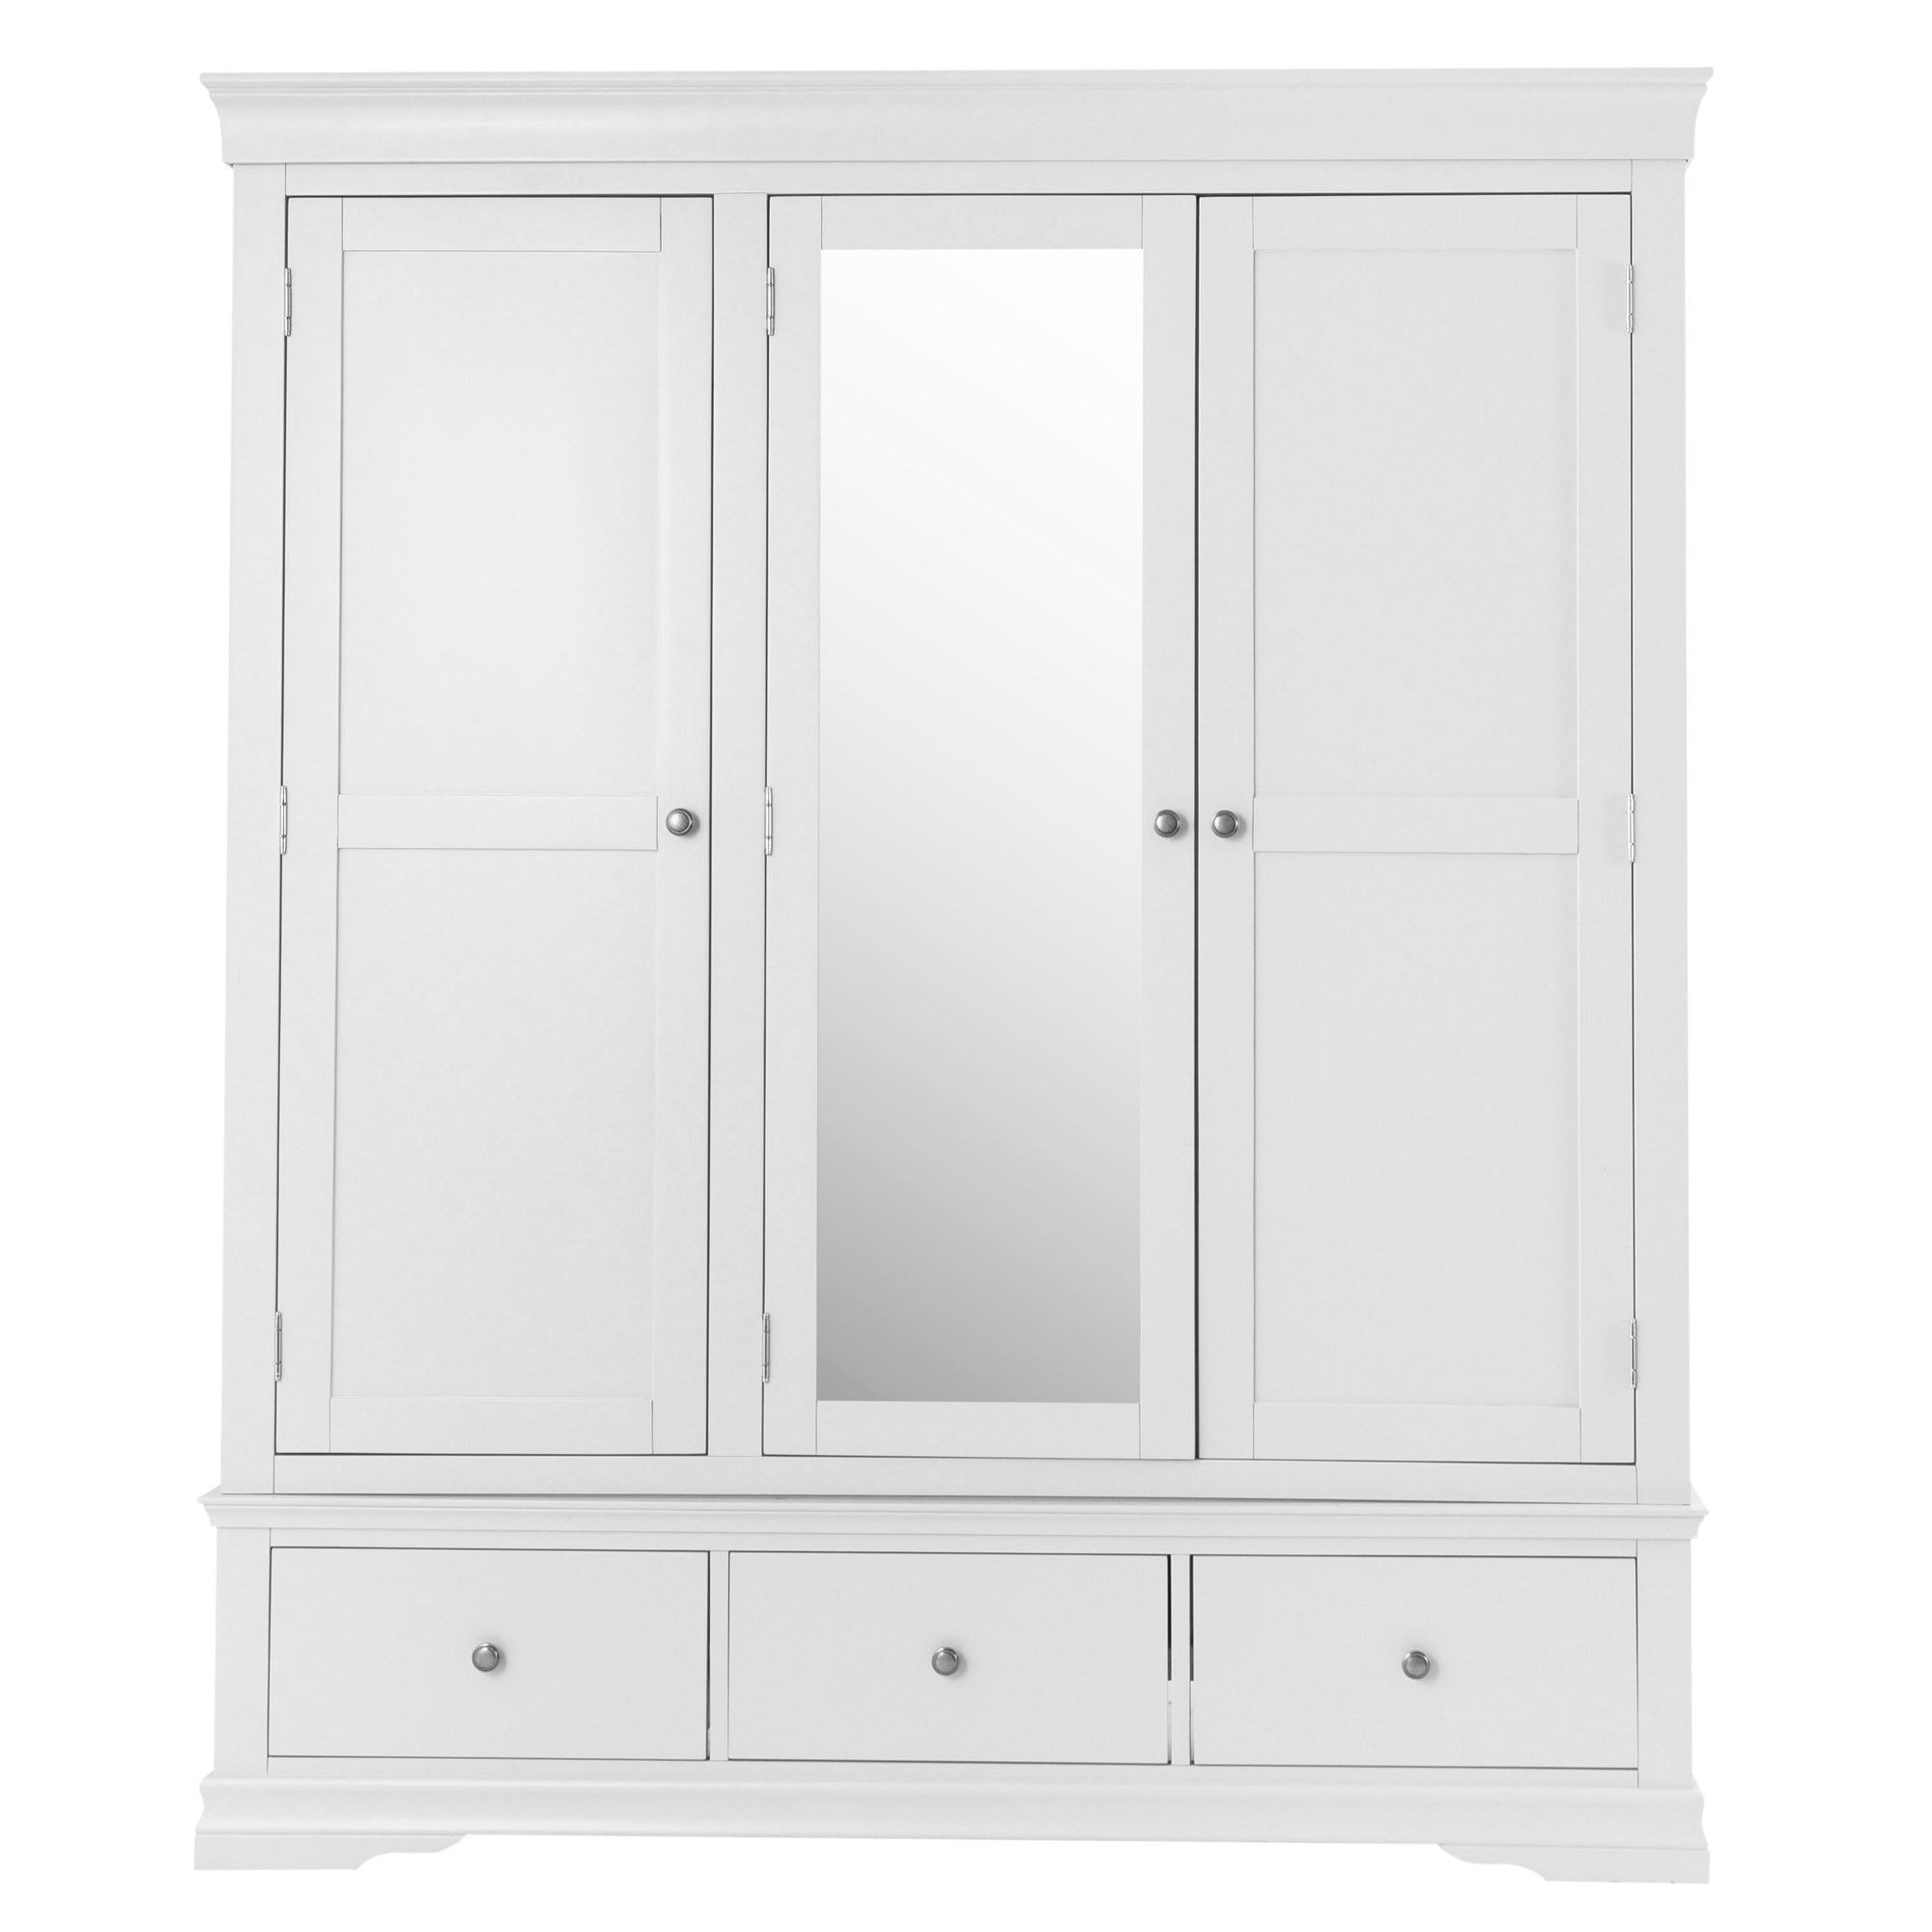 Swindon White 3 Door 3 Drawer Wardrobe | White Wardrobe | White Wooden  Wardrobe Inside White Wooden Wardrobes (Gallery 3 of 20)